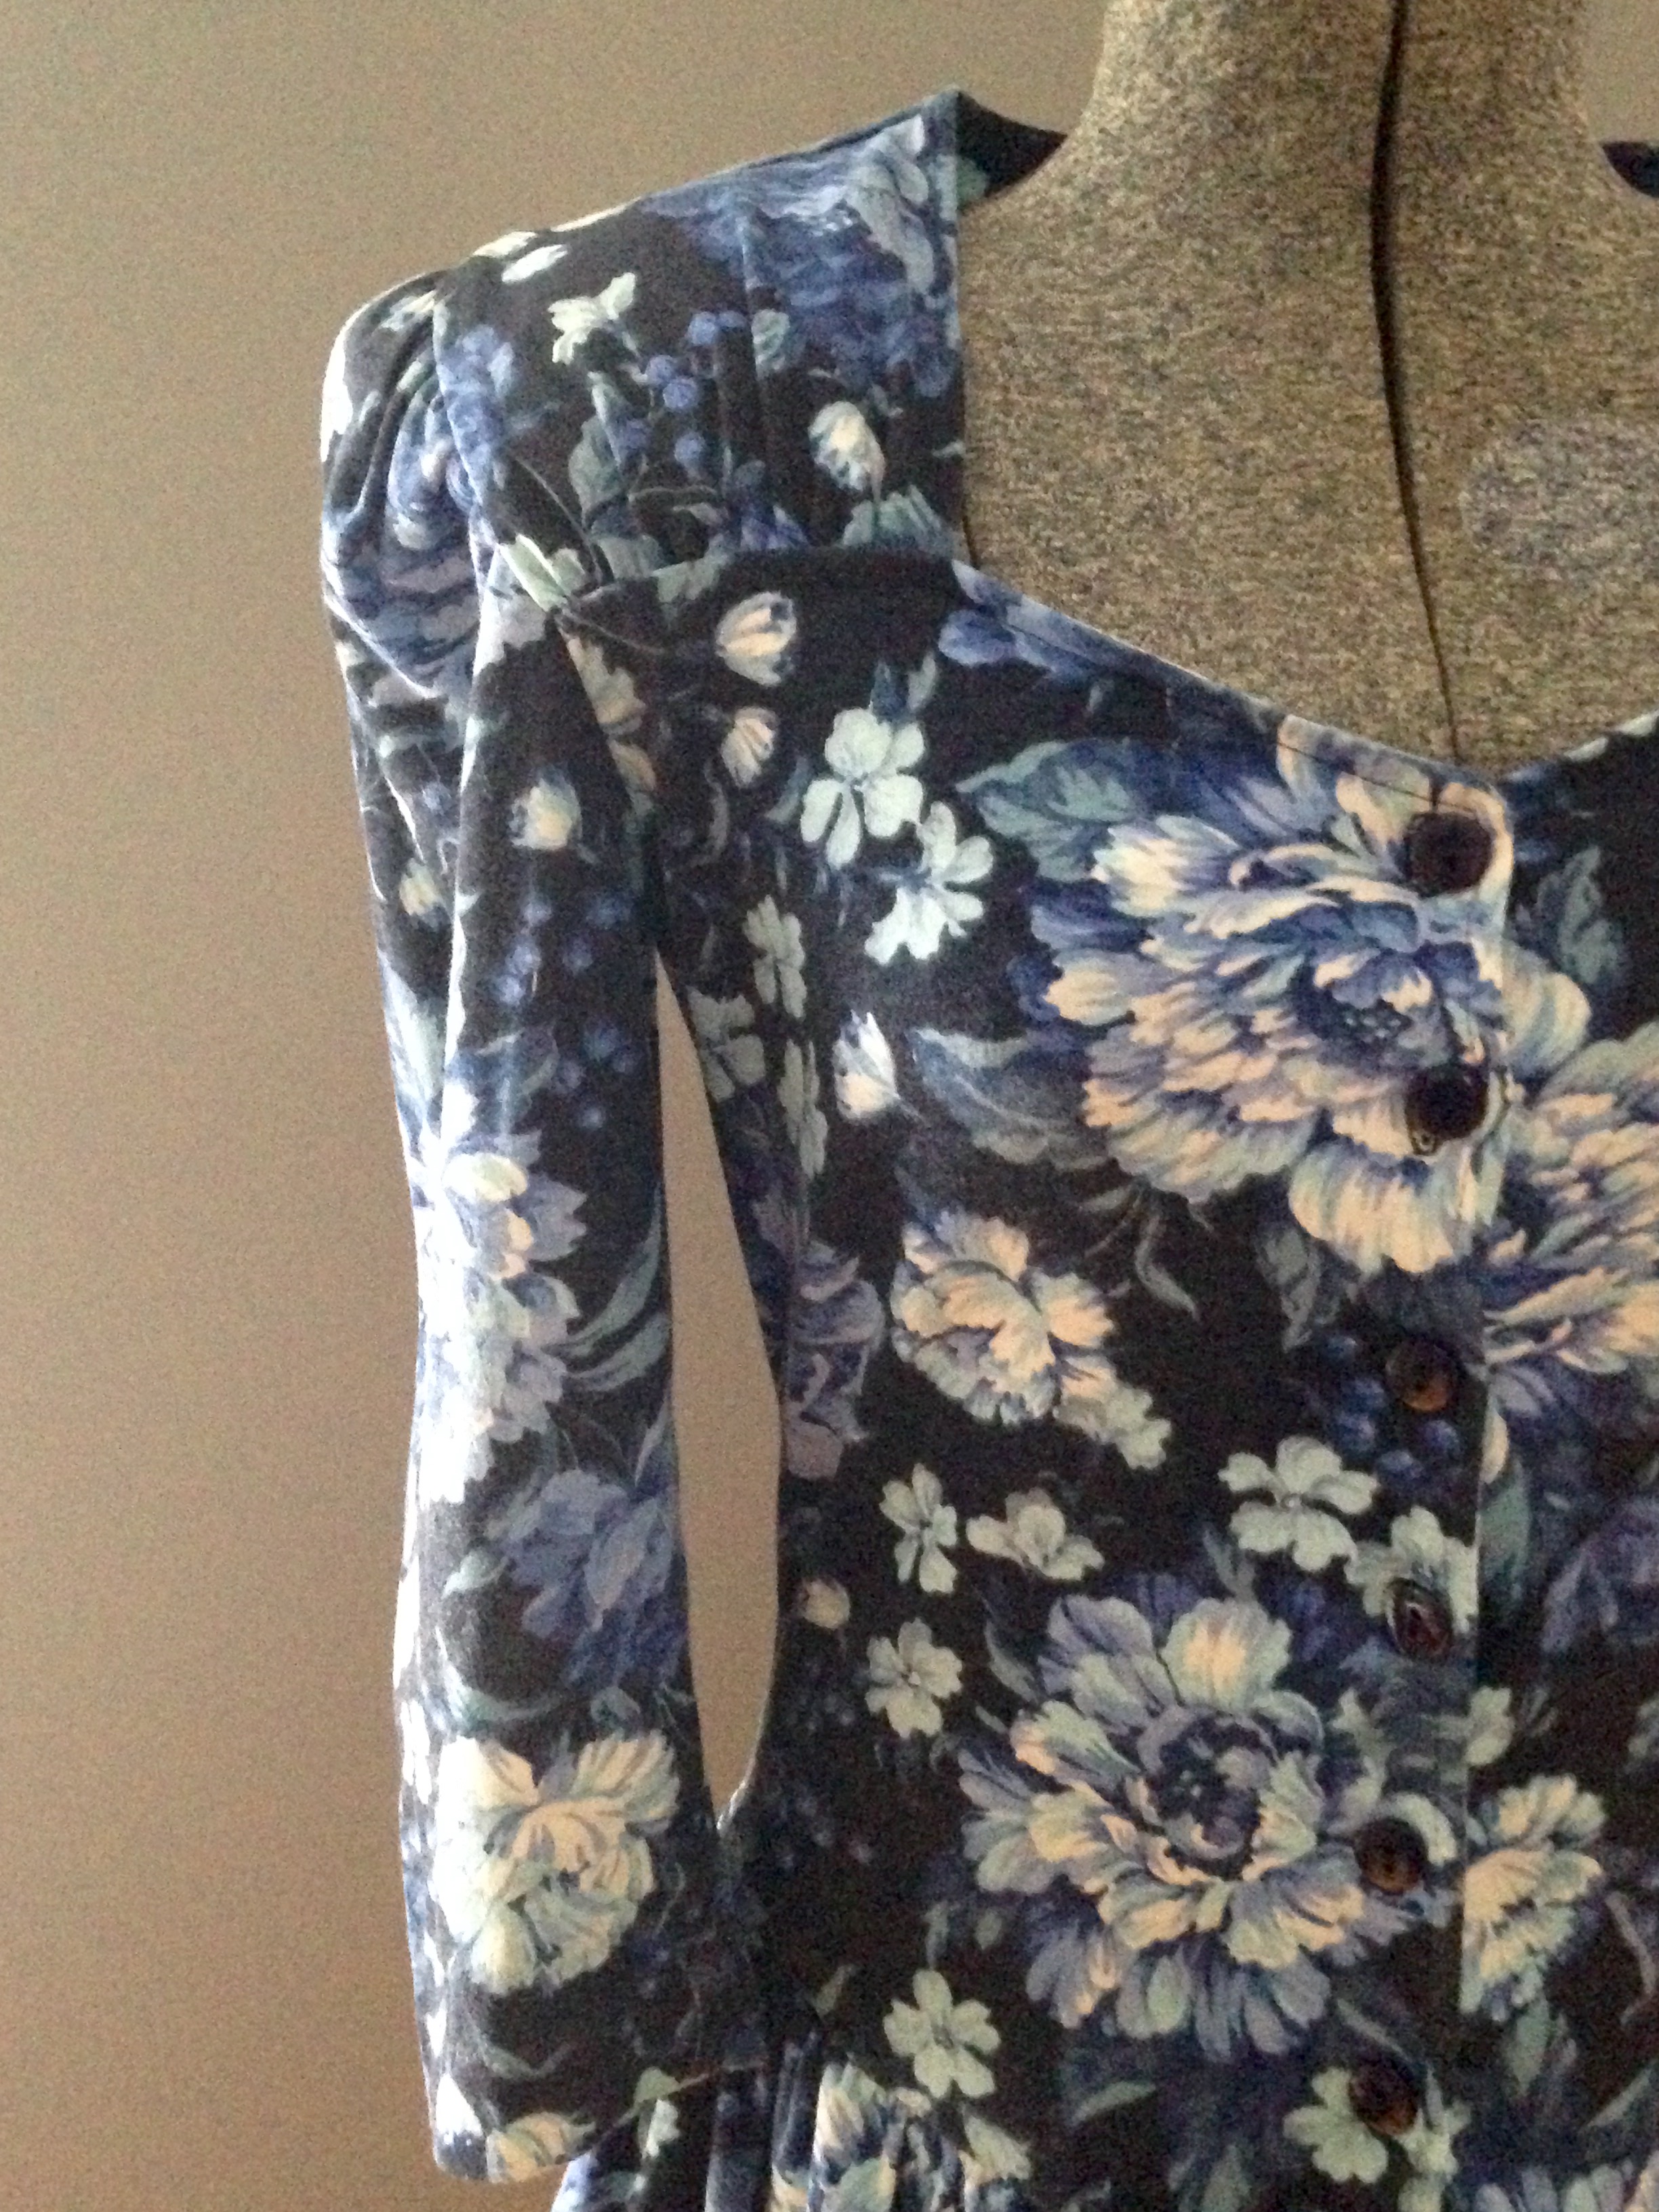 vintage blue floral fit and flare knit dress $77 - dresses - bright ...